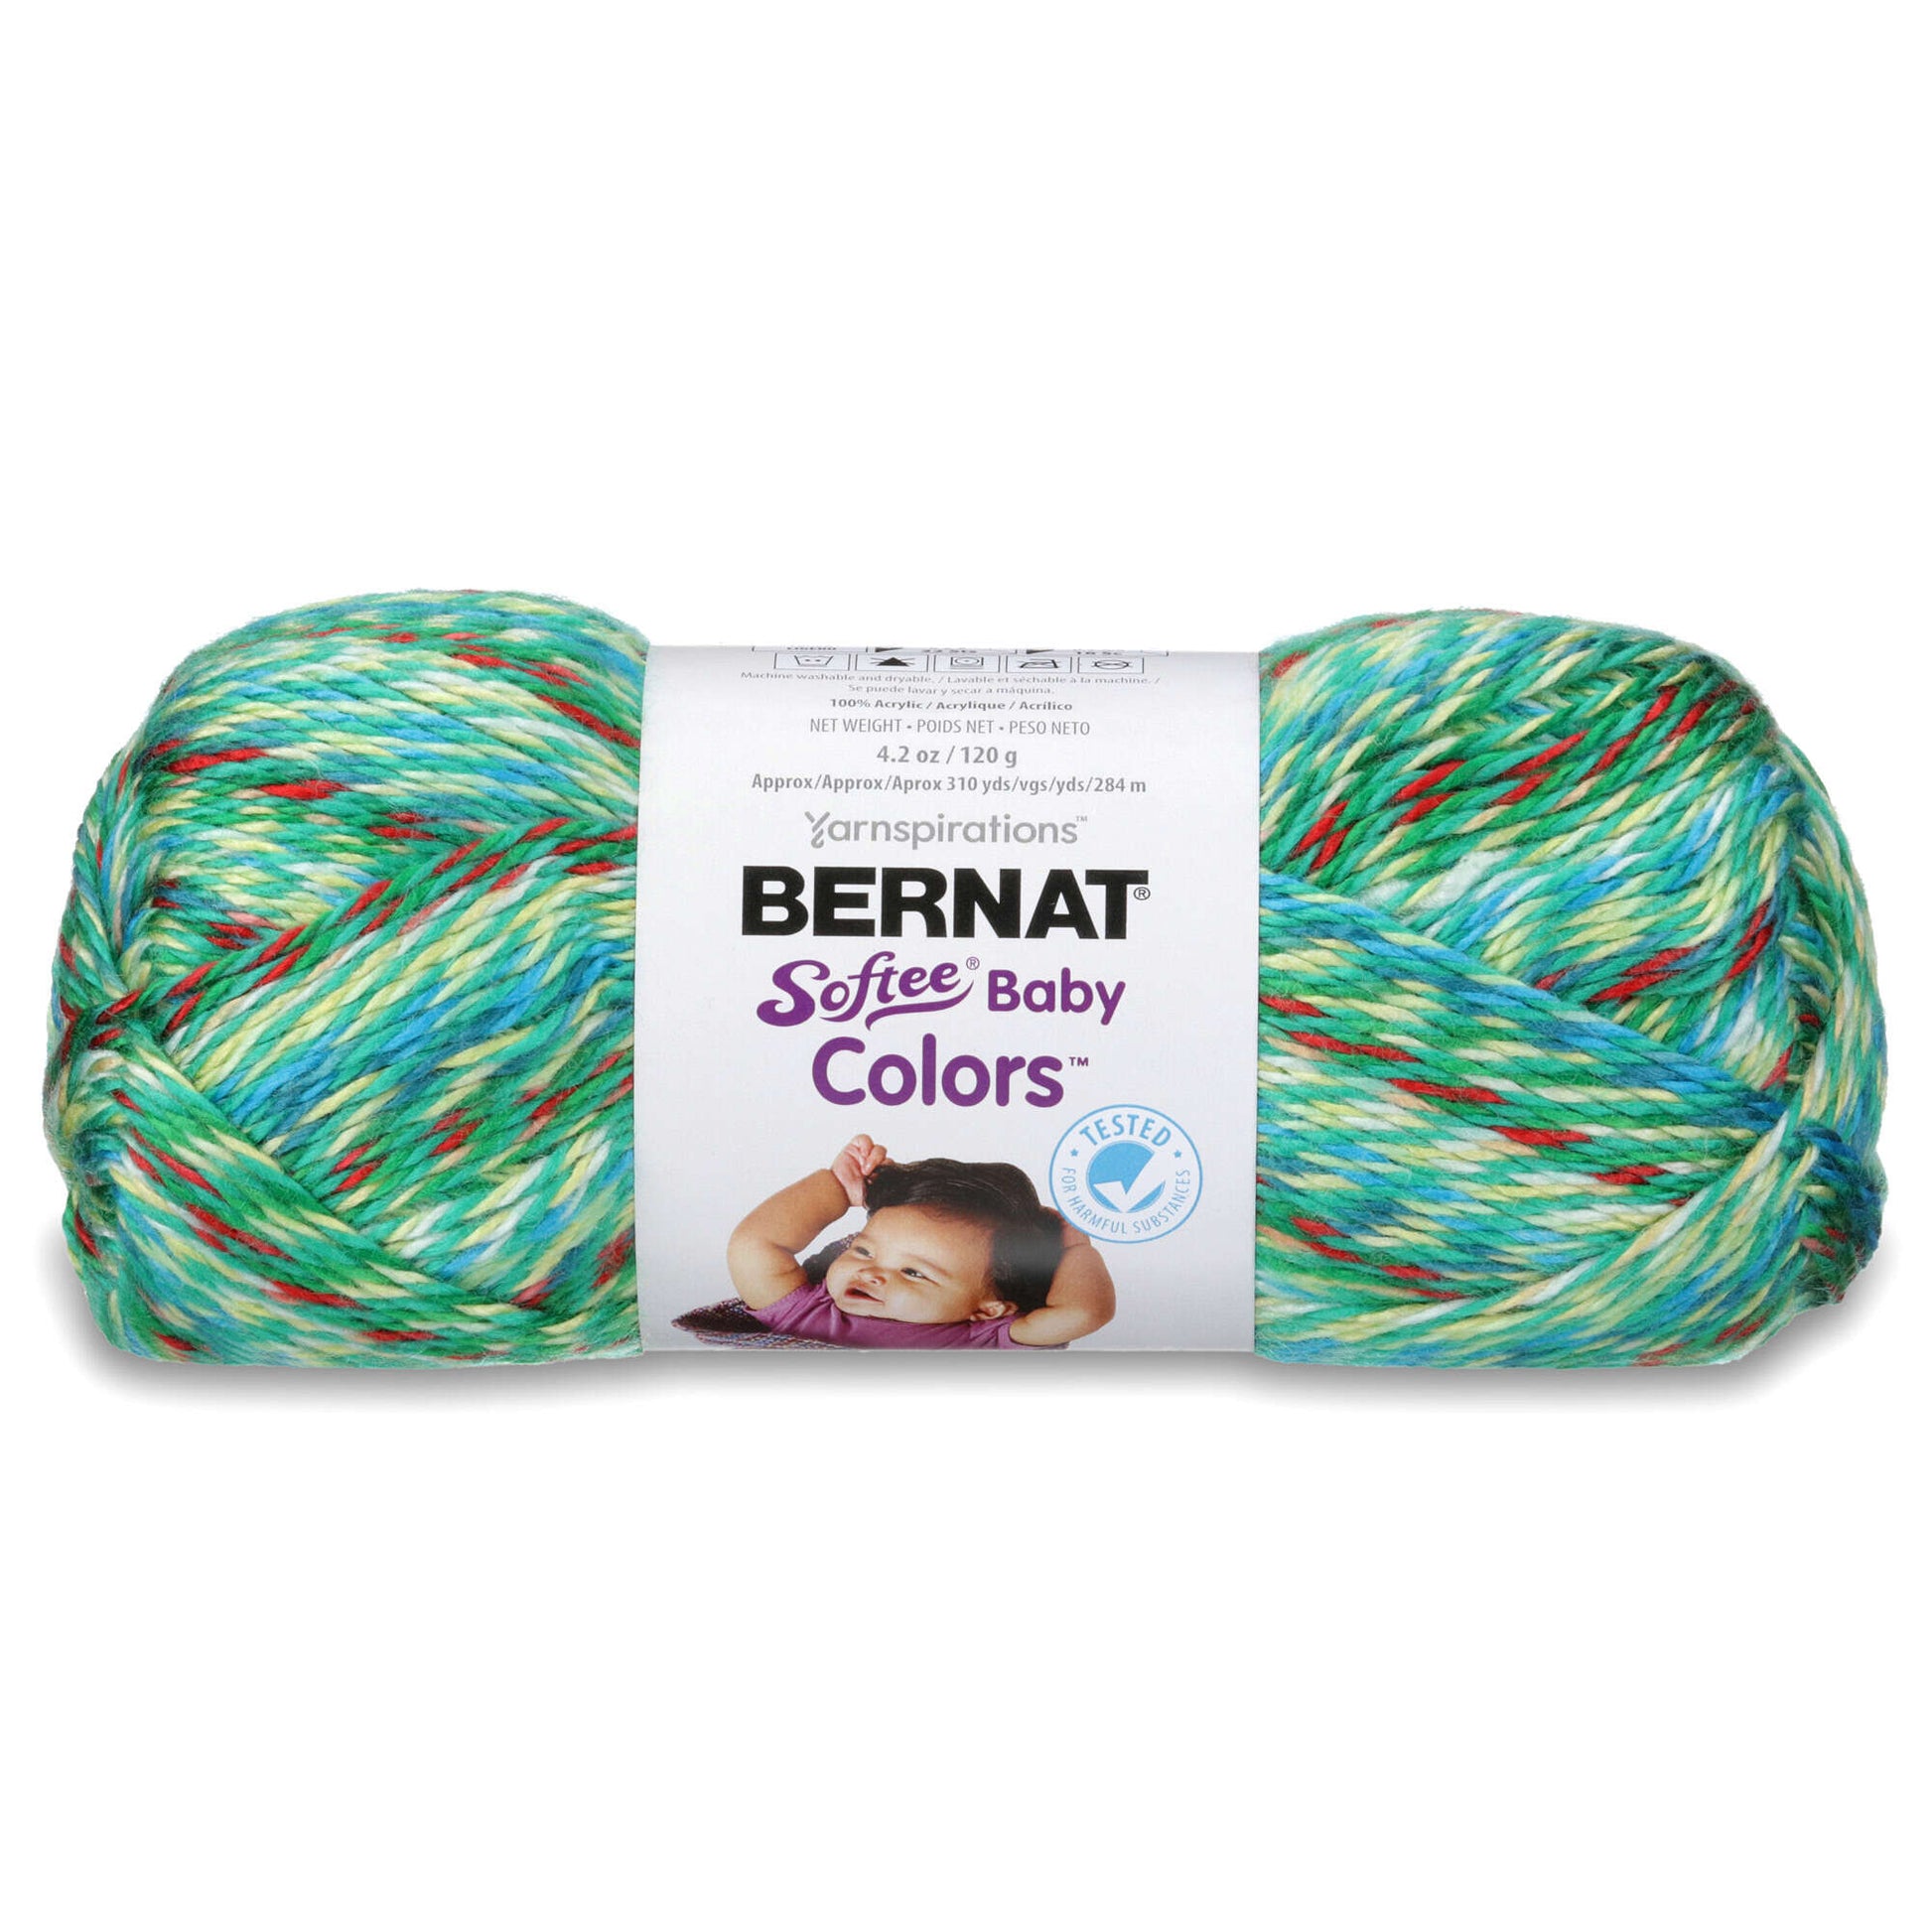 Bernat Softee Baby Colors Yarn - Discontinued Shades Green Rainbow